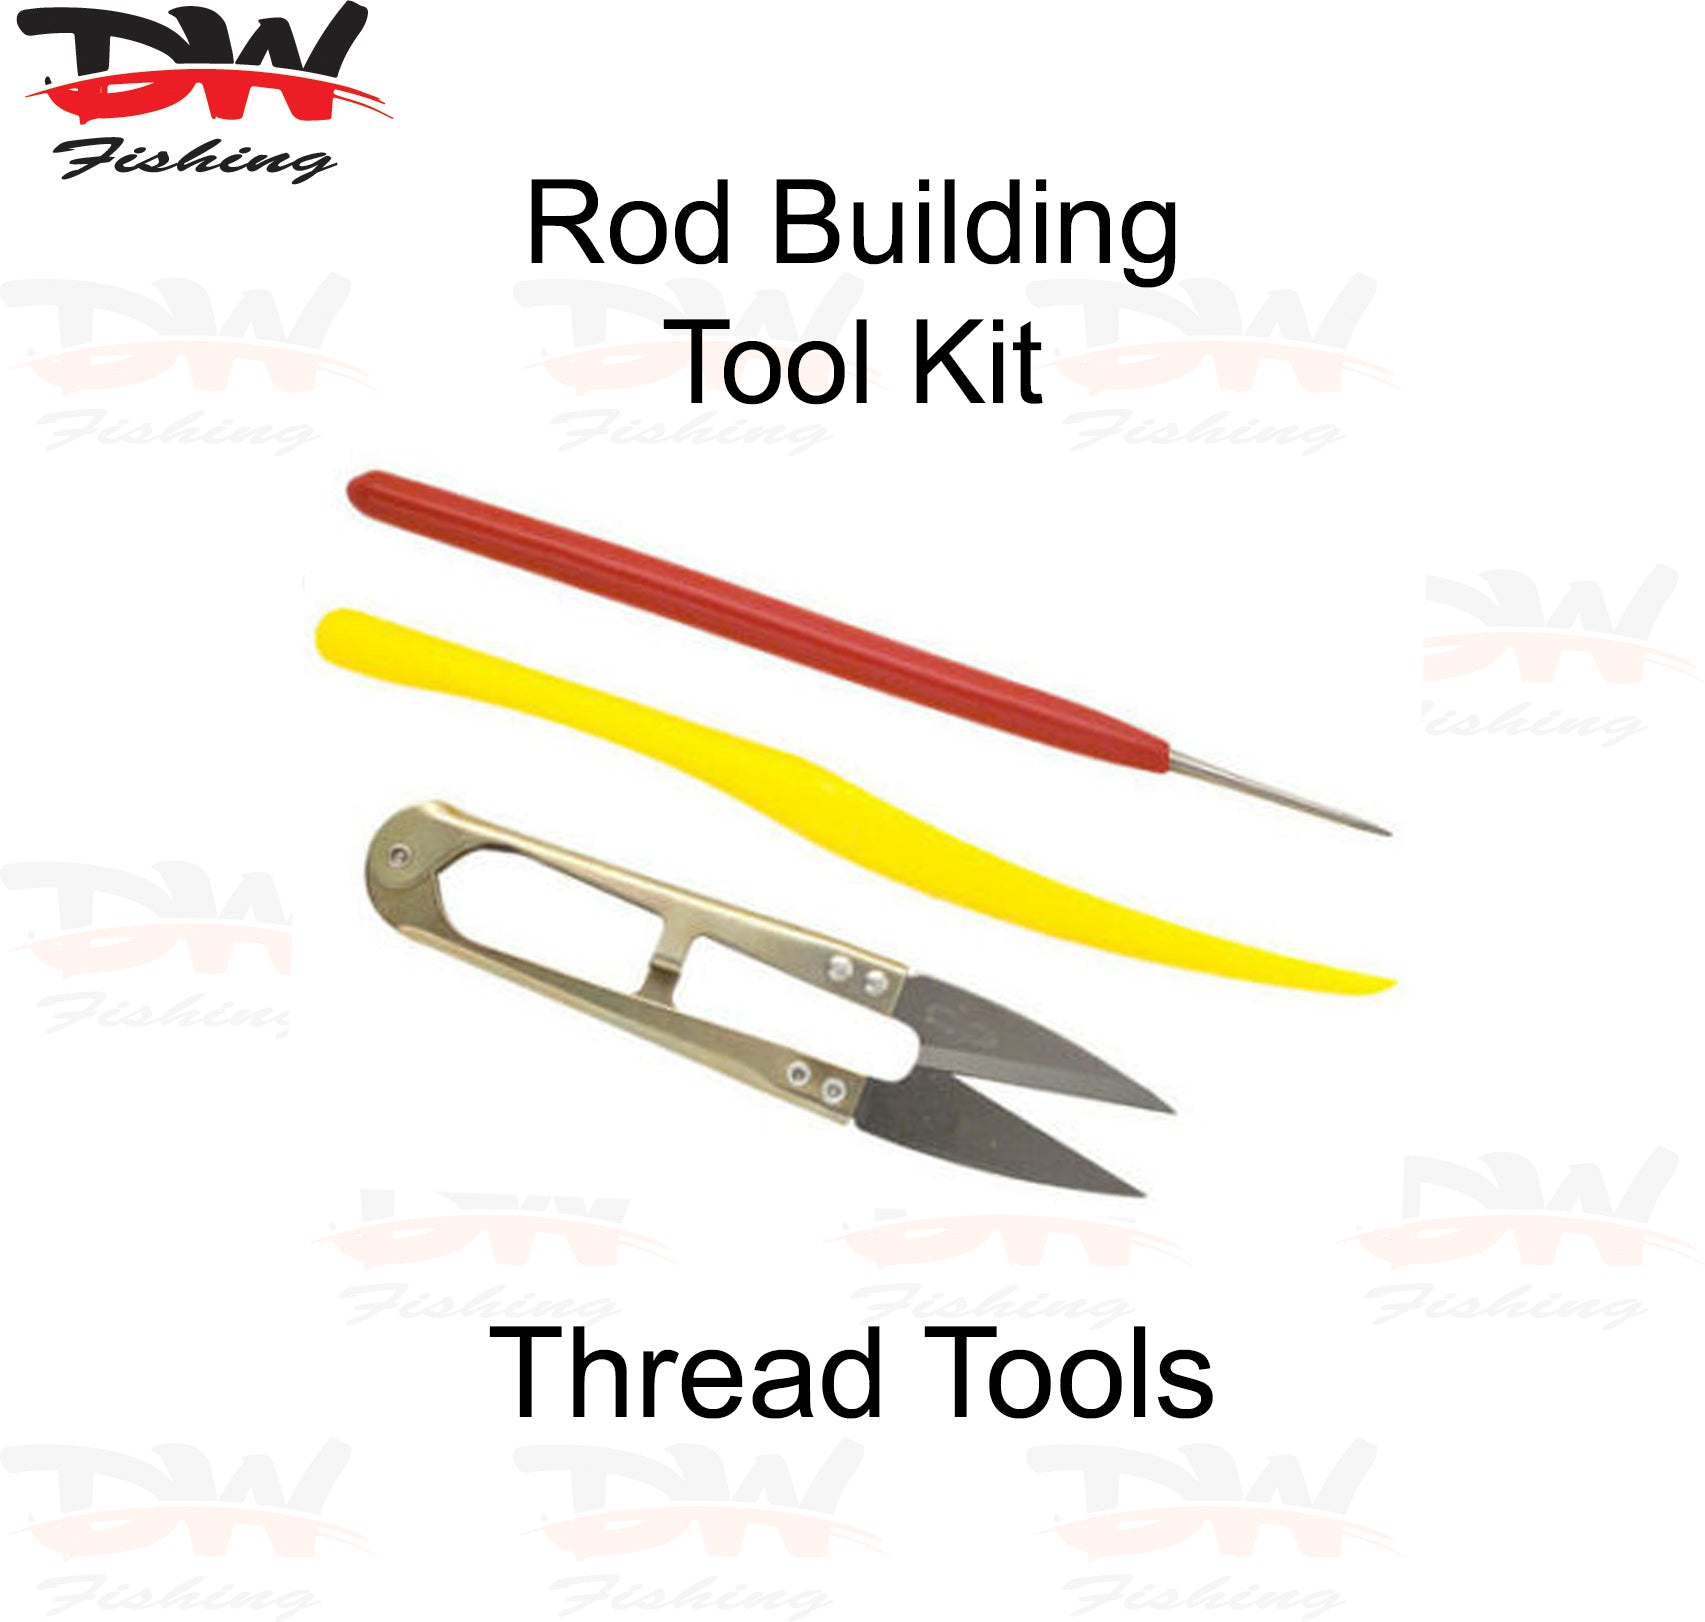 Rod Building 3 Pce  Tool Kit -Thread Clippers, Burnishing Tool & Thread Pick